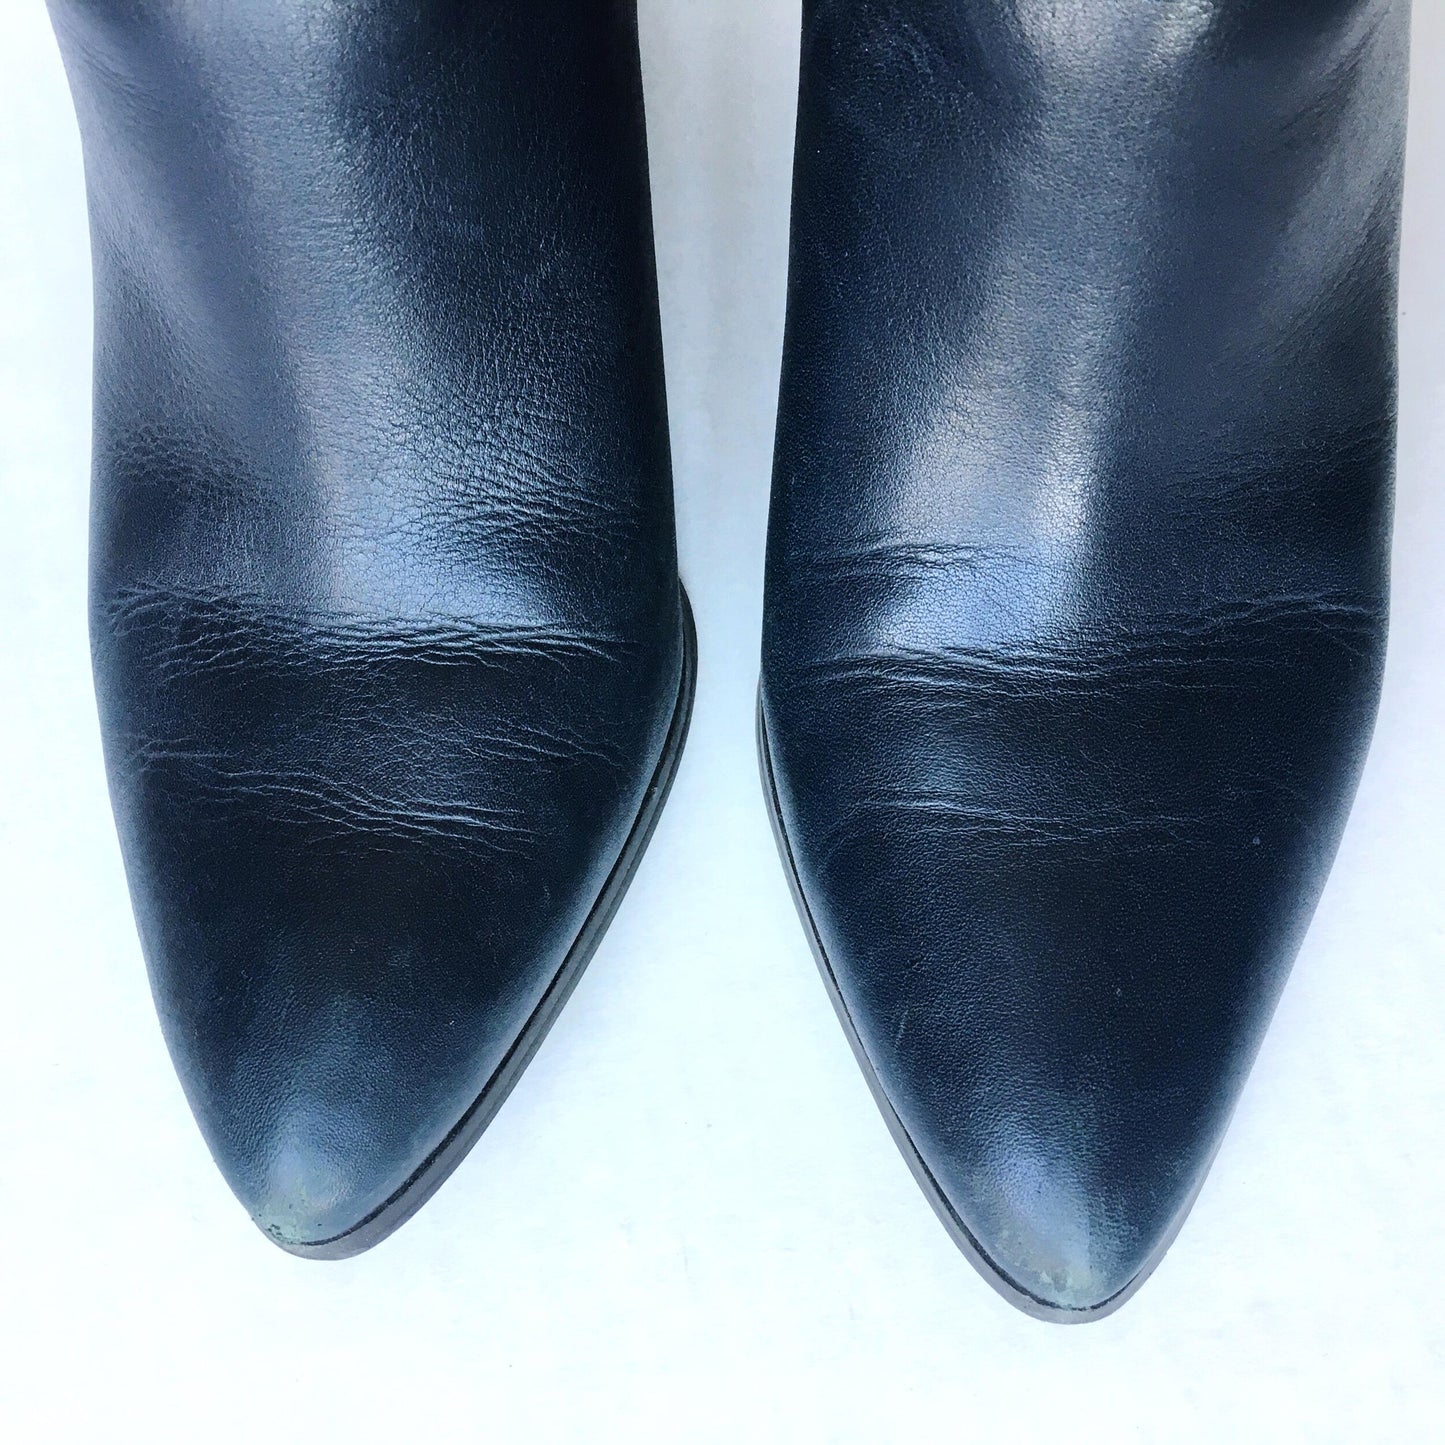 Franco Sarto leather bootie - size 8.5